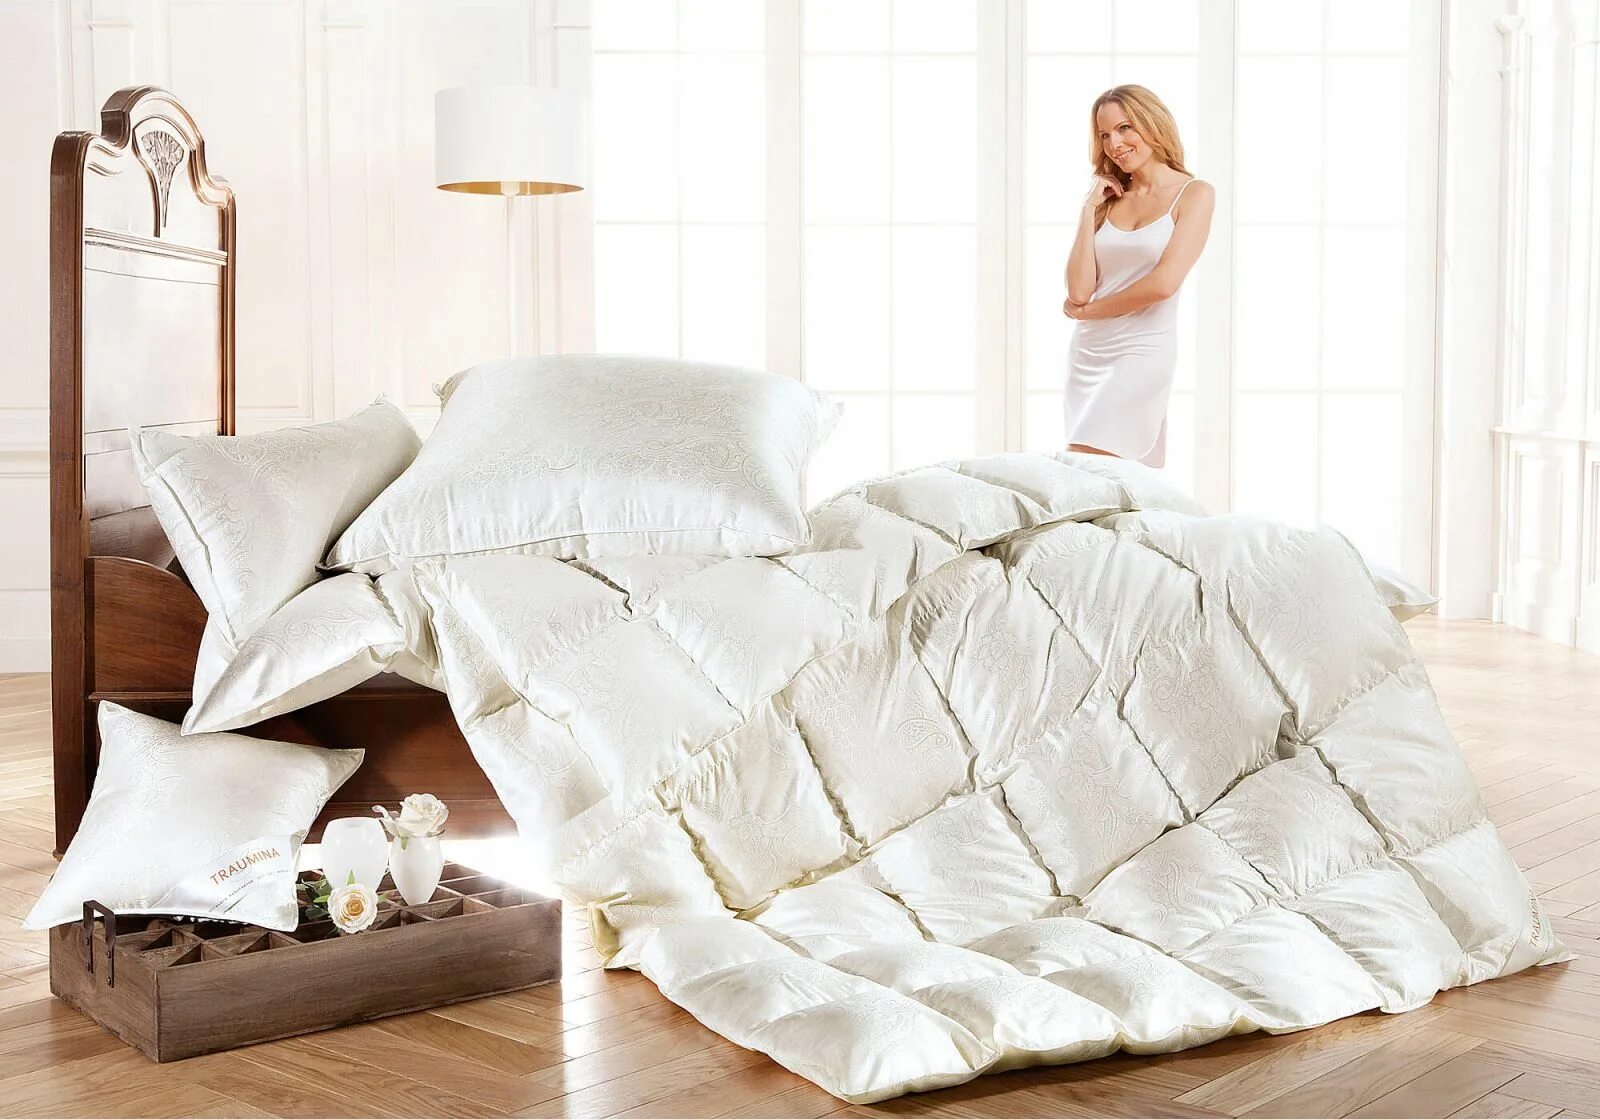 Одеялы. Одеяло. Красивое одеяло. Одеяло и подушка. Одеявол.